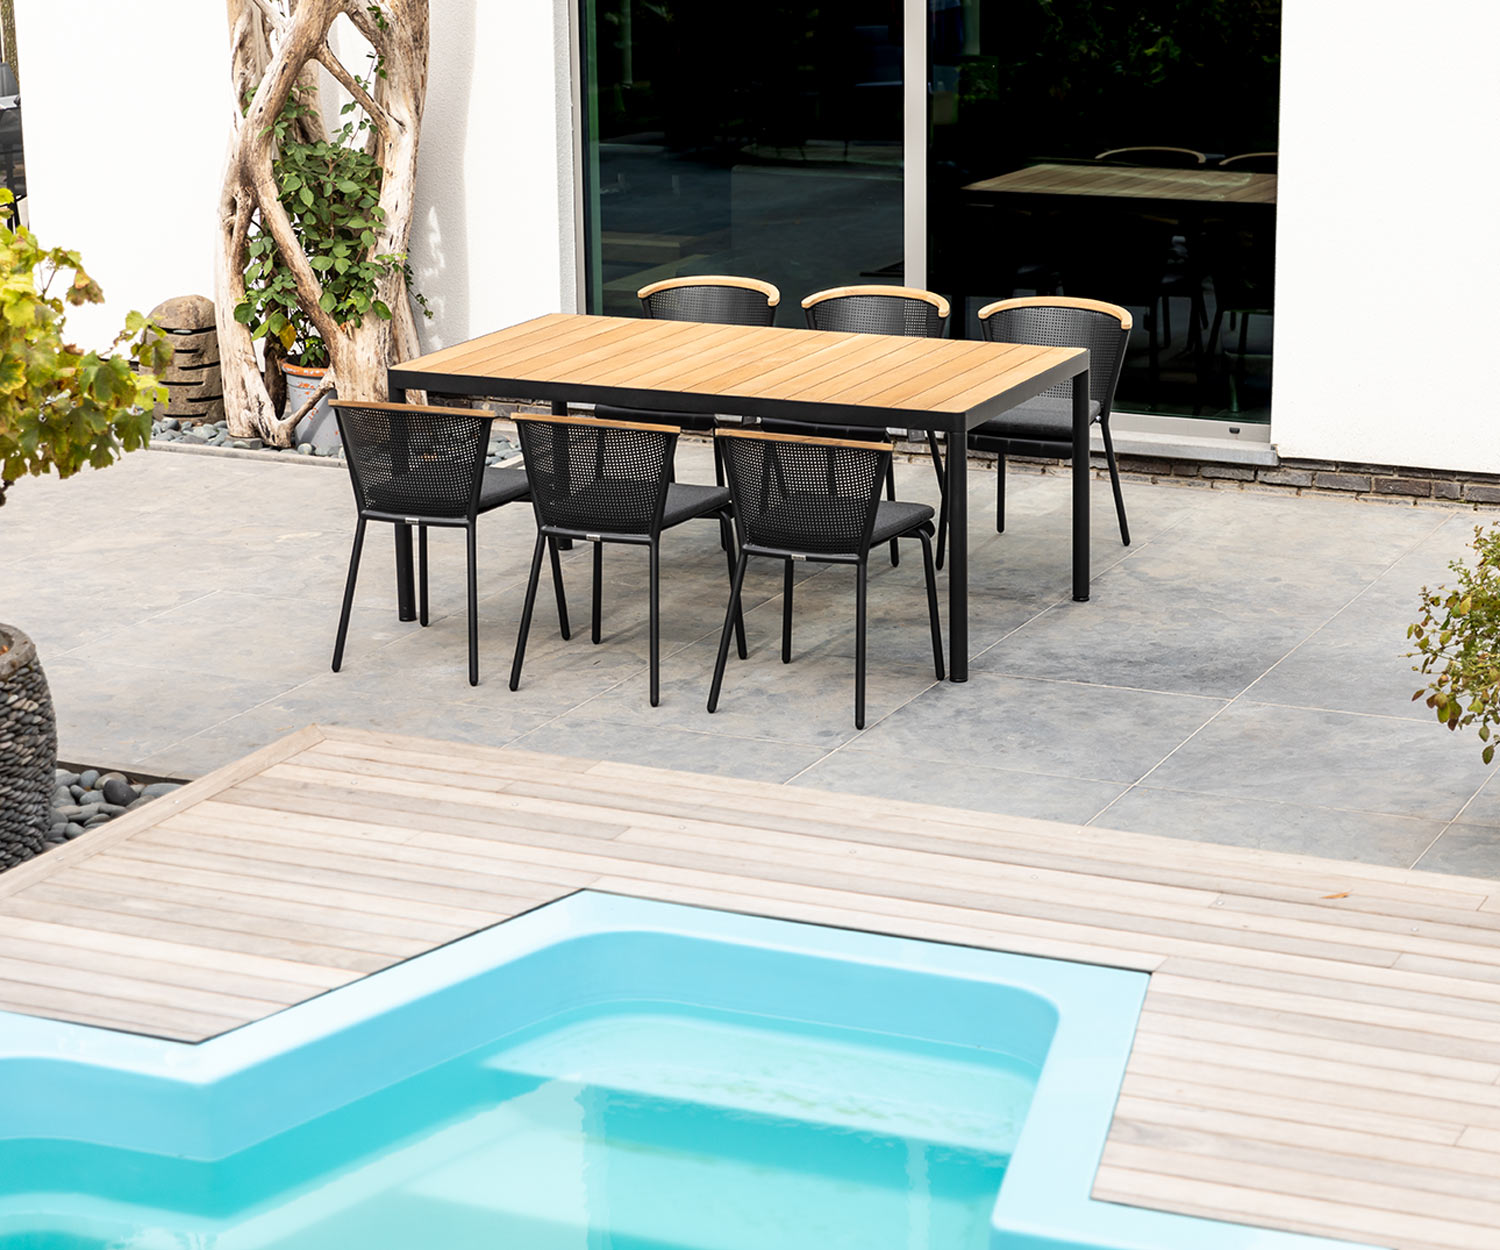 Weatherproof Oasiq Riad design garden table on poolside terrace